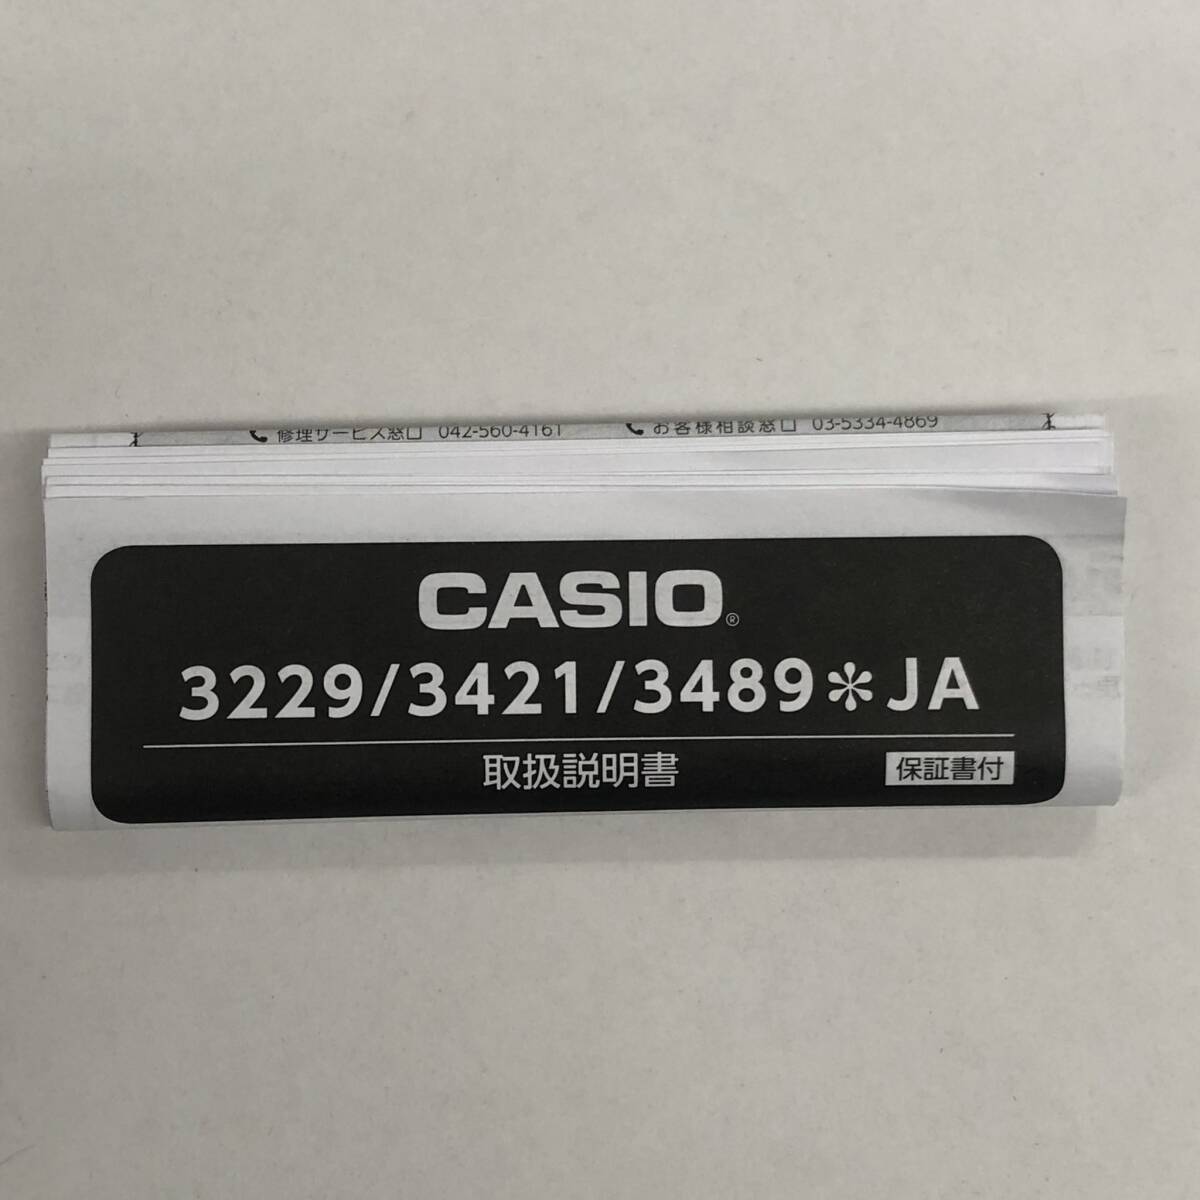 275-AR71) CASIO G-SHOCK BASIC DW-5600HDR-1JR THE HUNDREDS Limited Edition BLACK カシオ ブラック デジタル 20気圧防水 コラボ _画像6